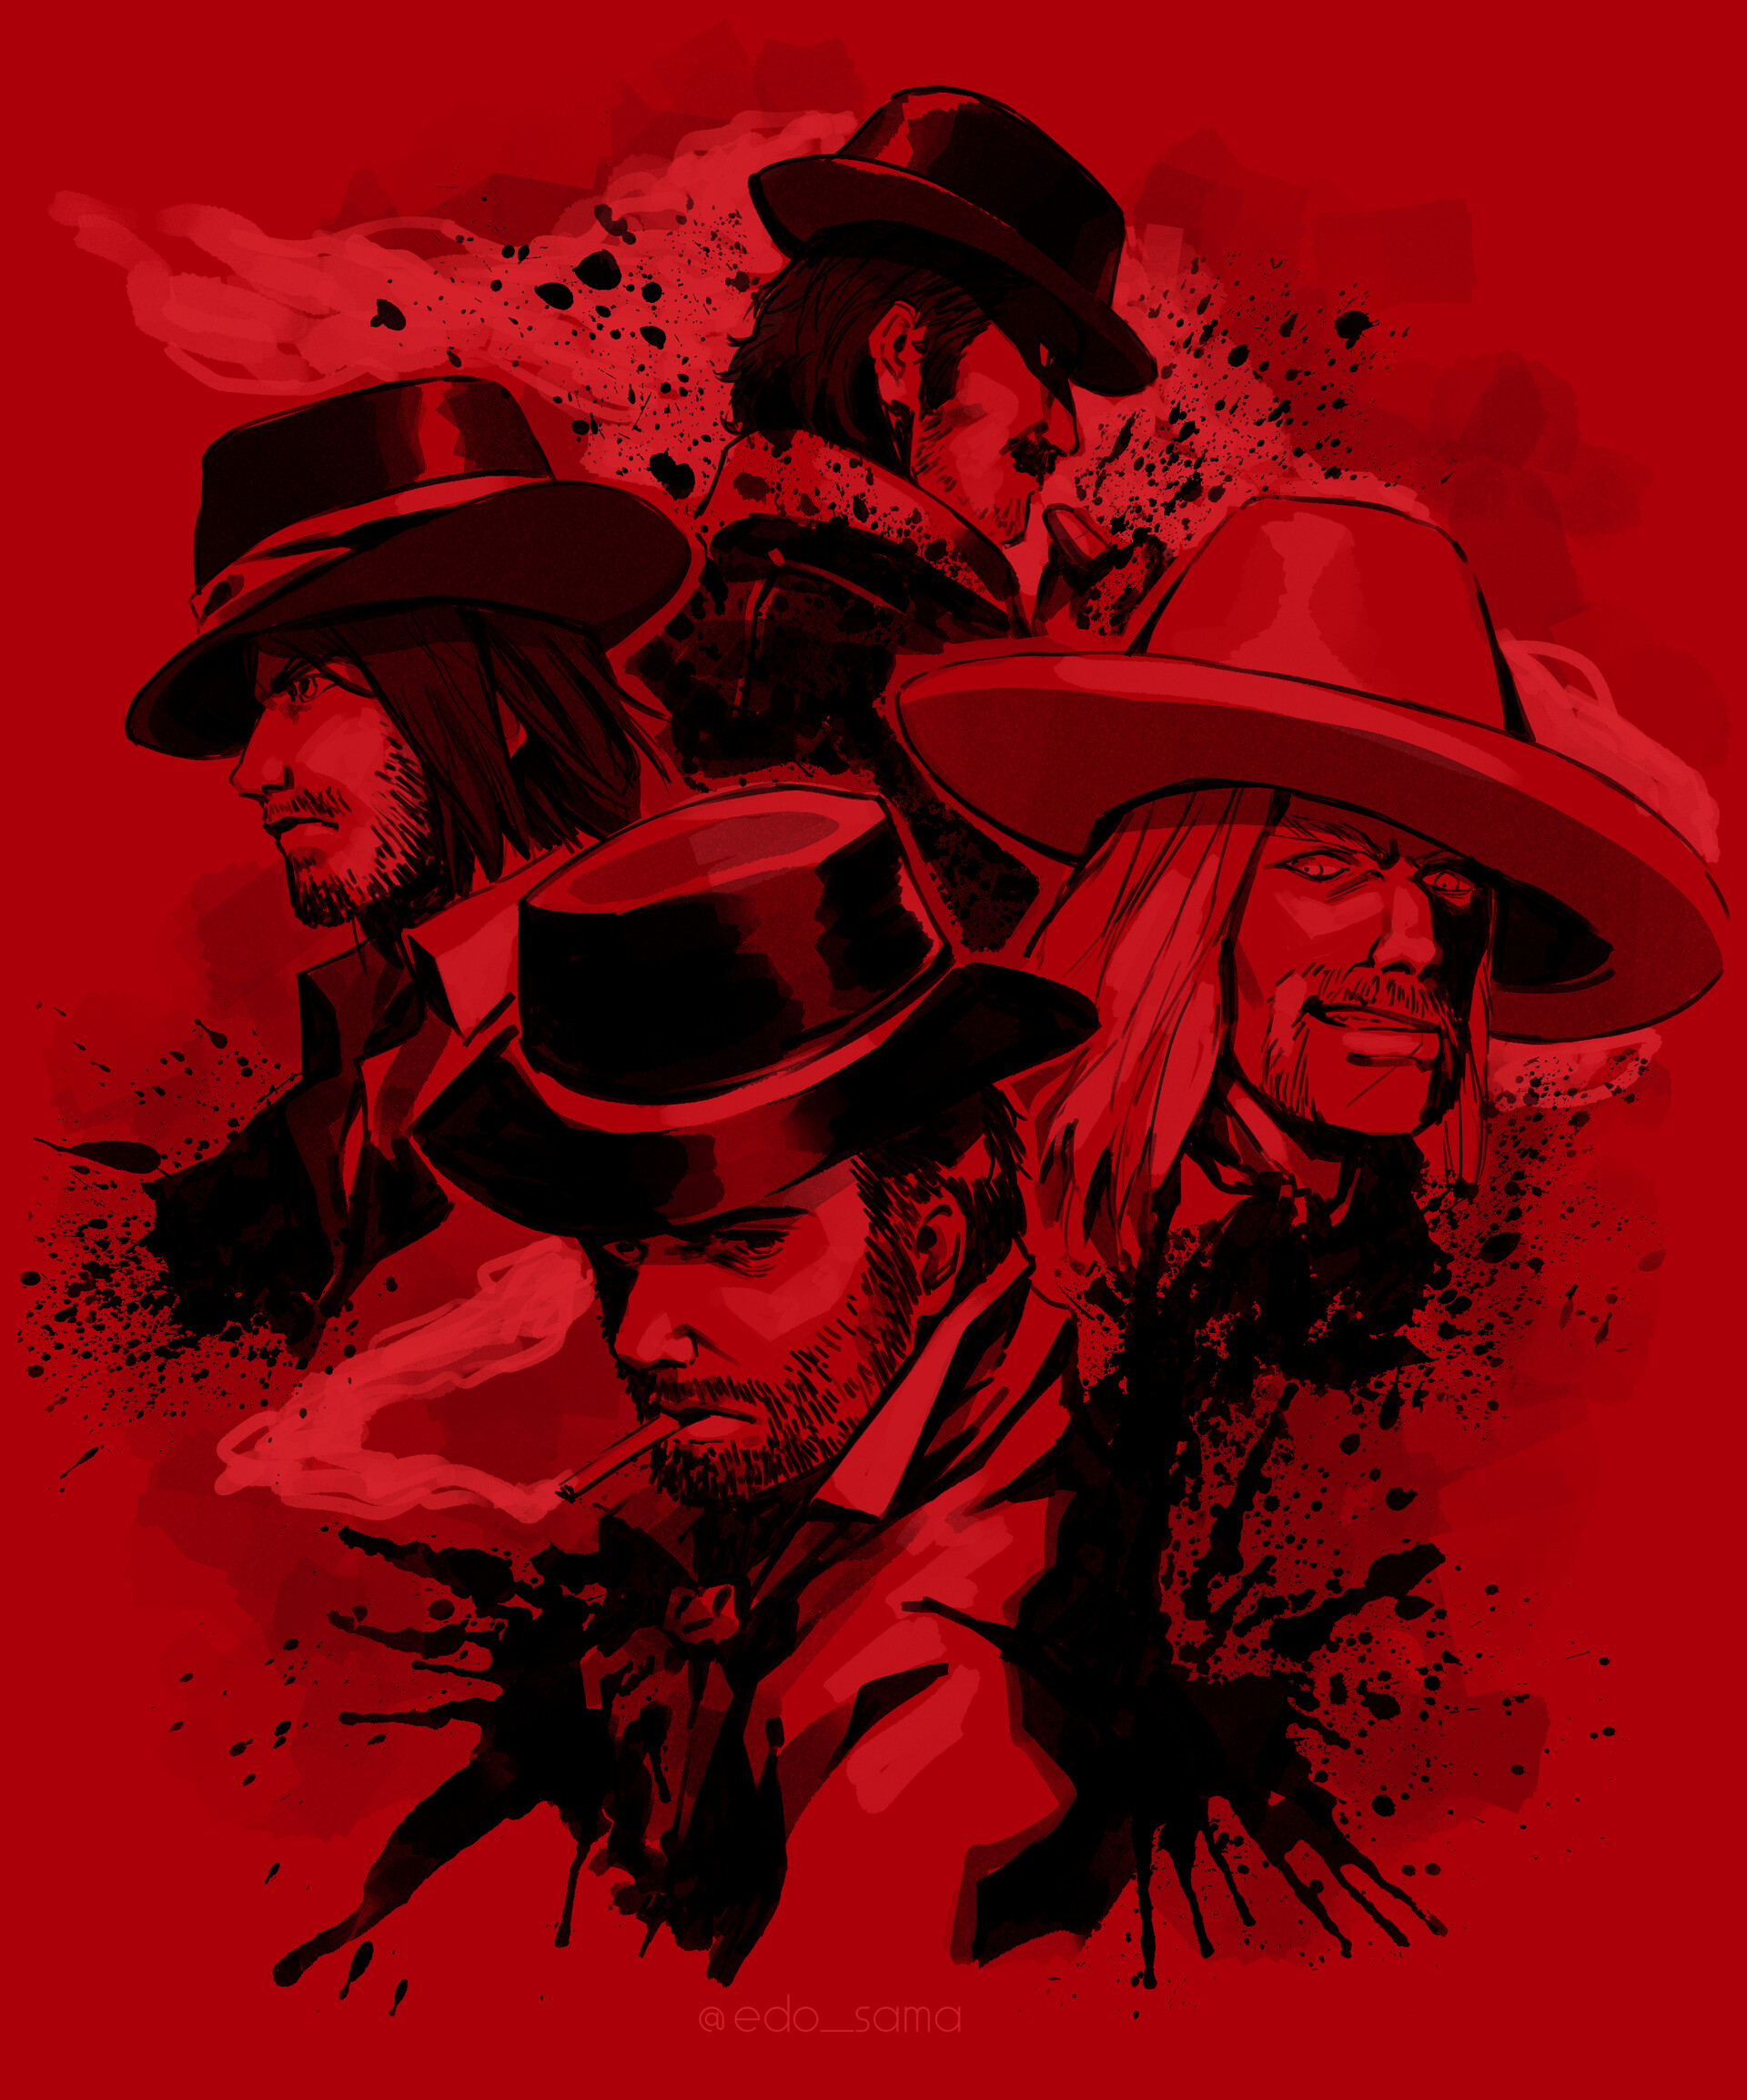 ArtStation - Red Dead Redemption 2 - Wallpaper Collection